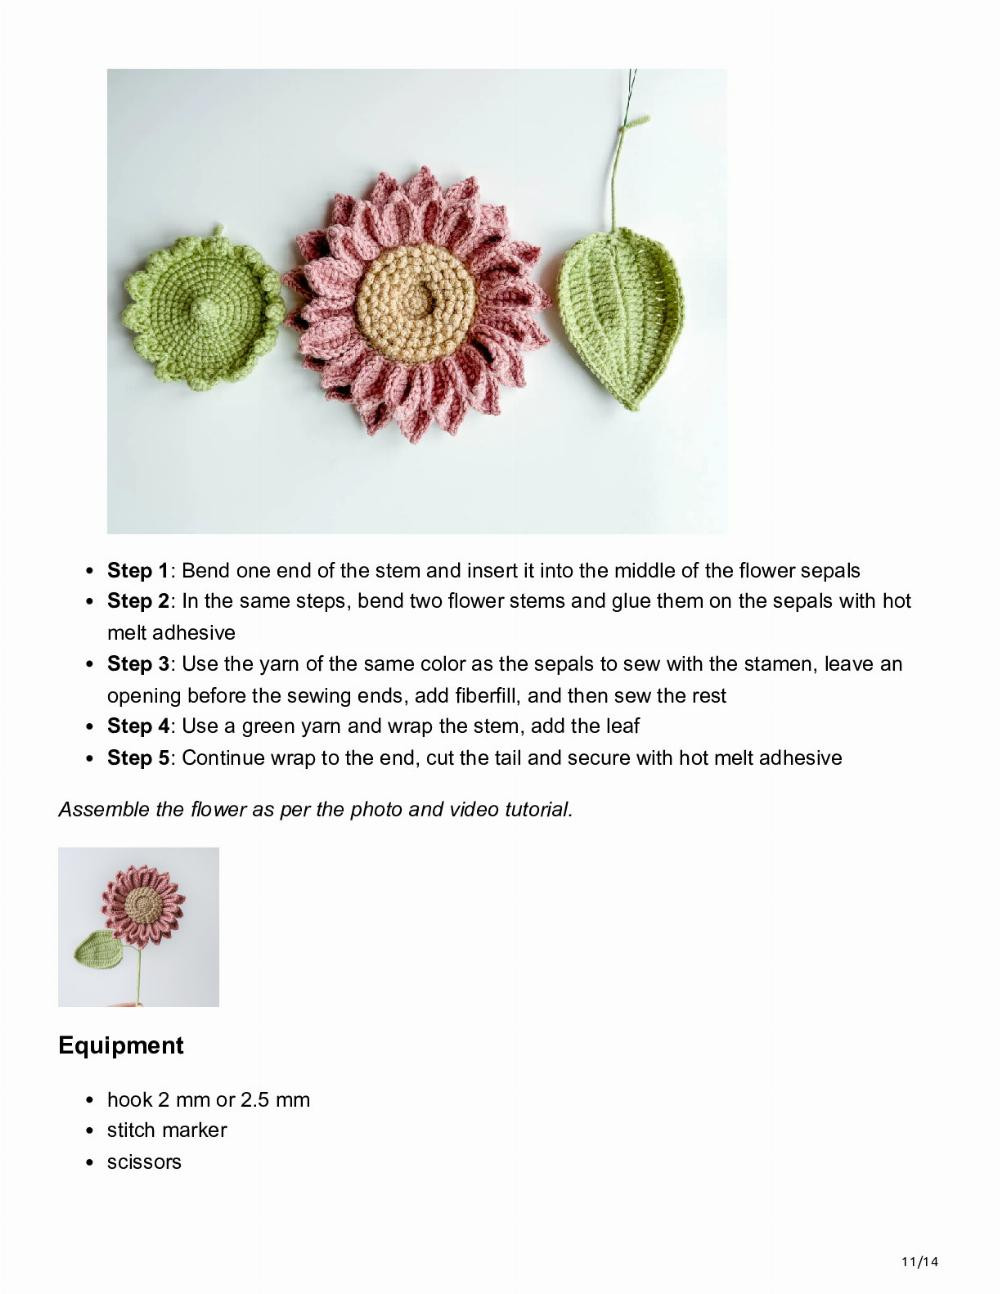 Crochet Sunflower BouquetPattern Hook